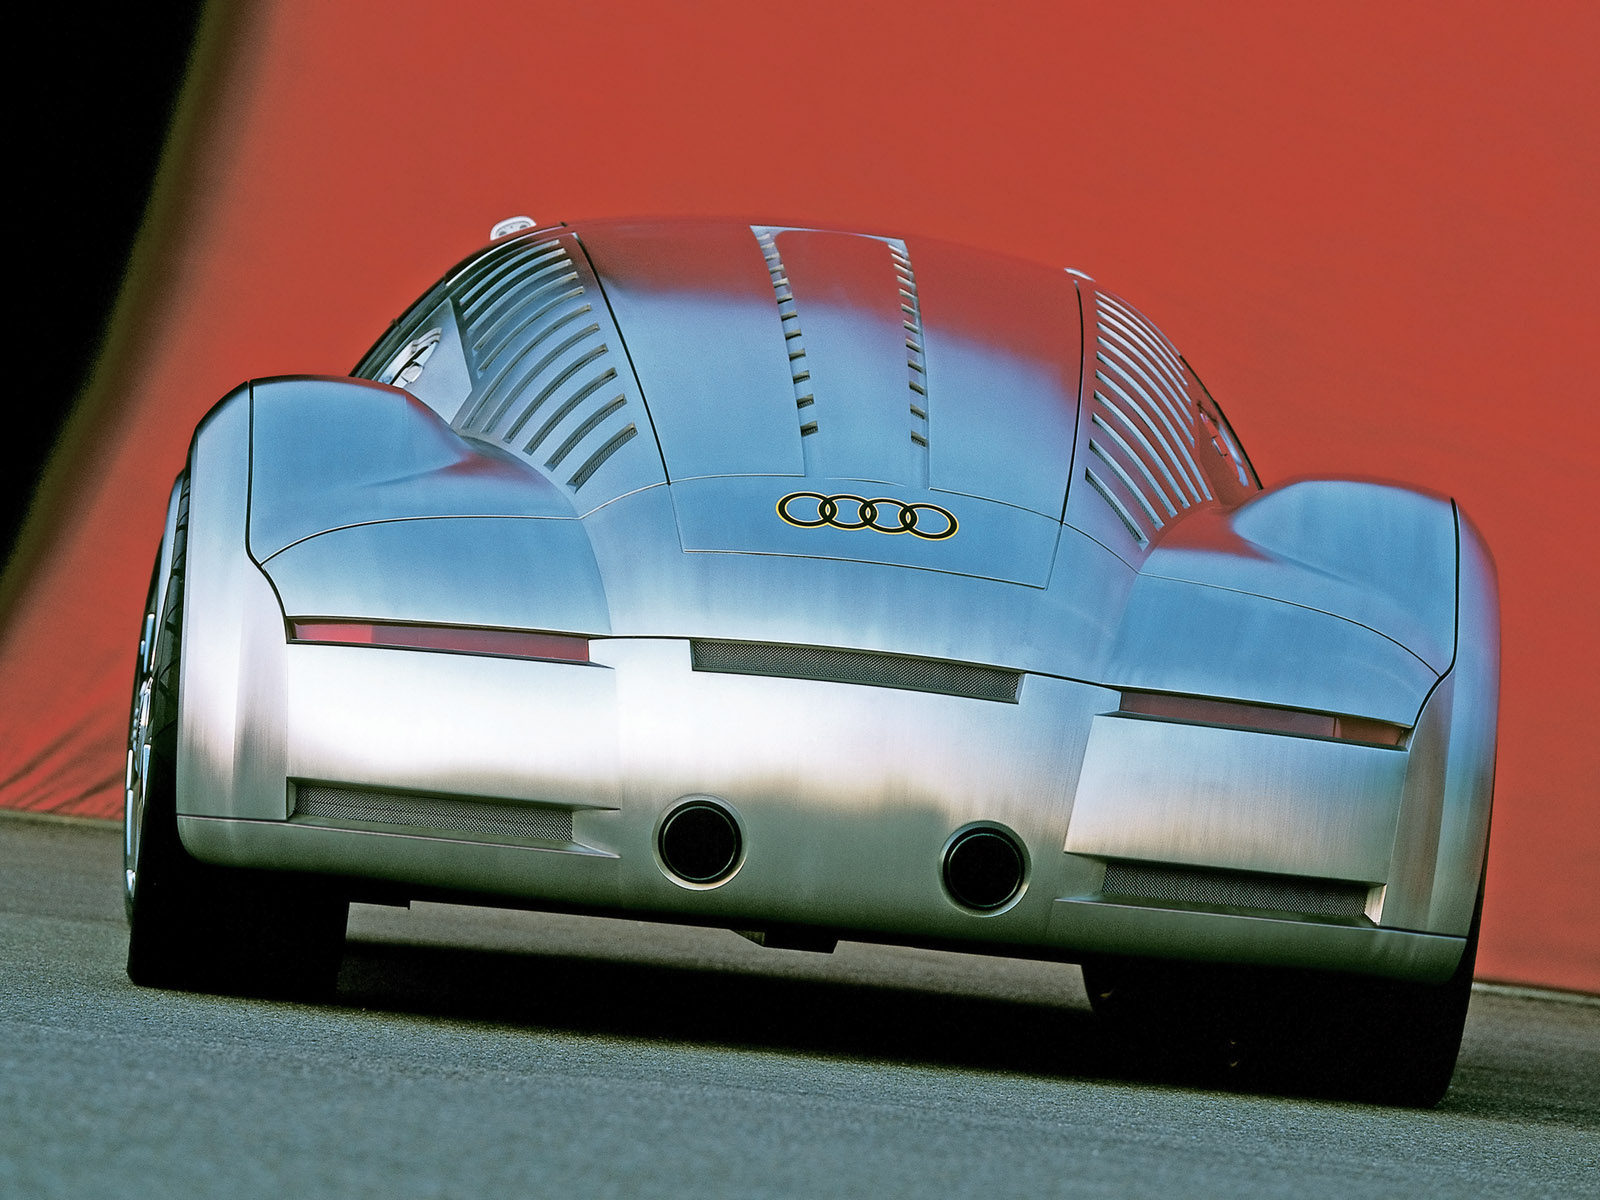 2000-Audi-Rosemeyer-Concept-R-1600x1200